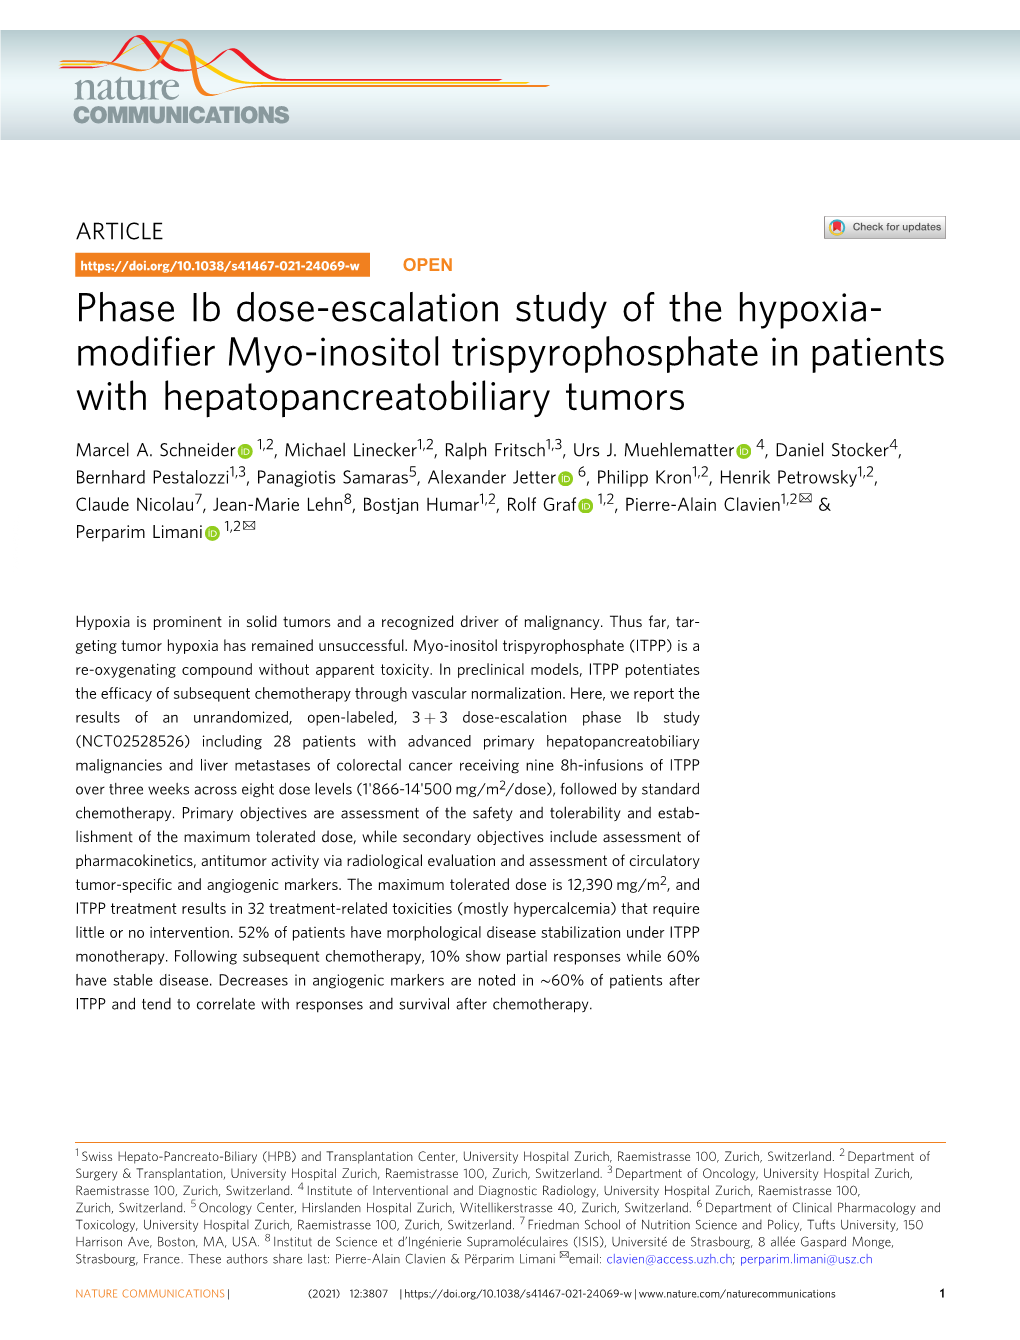 Phase Ib Dose-Escalation Study of the Hypoxia-Modifier Myo-Inositol